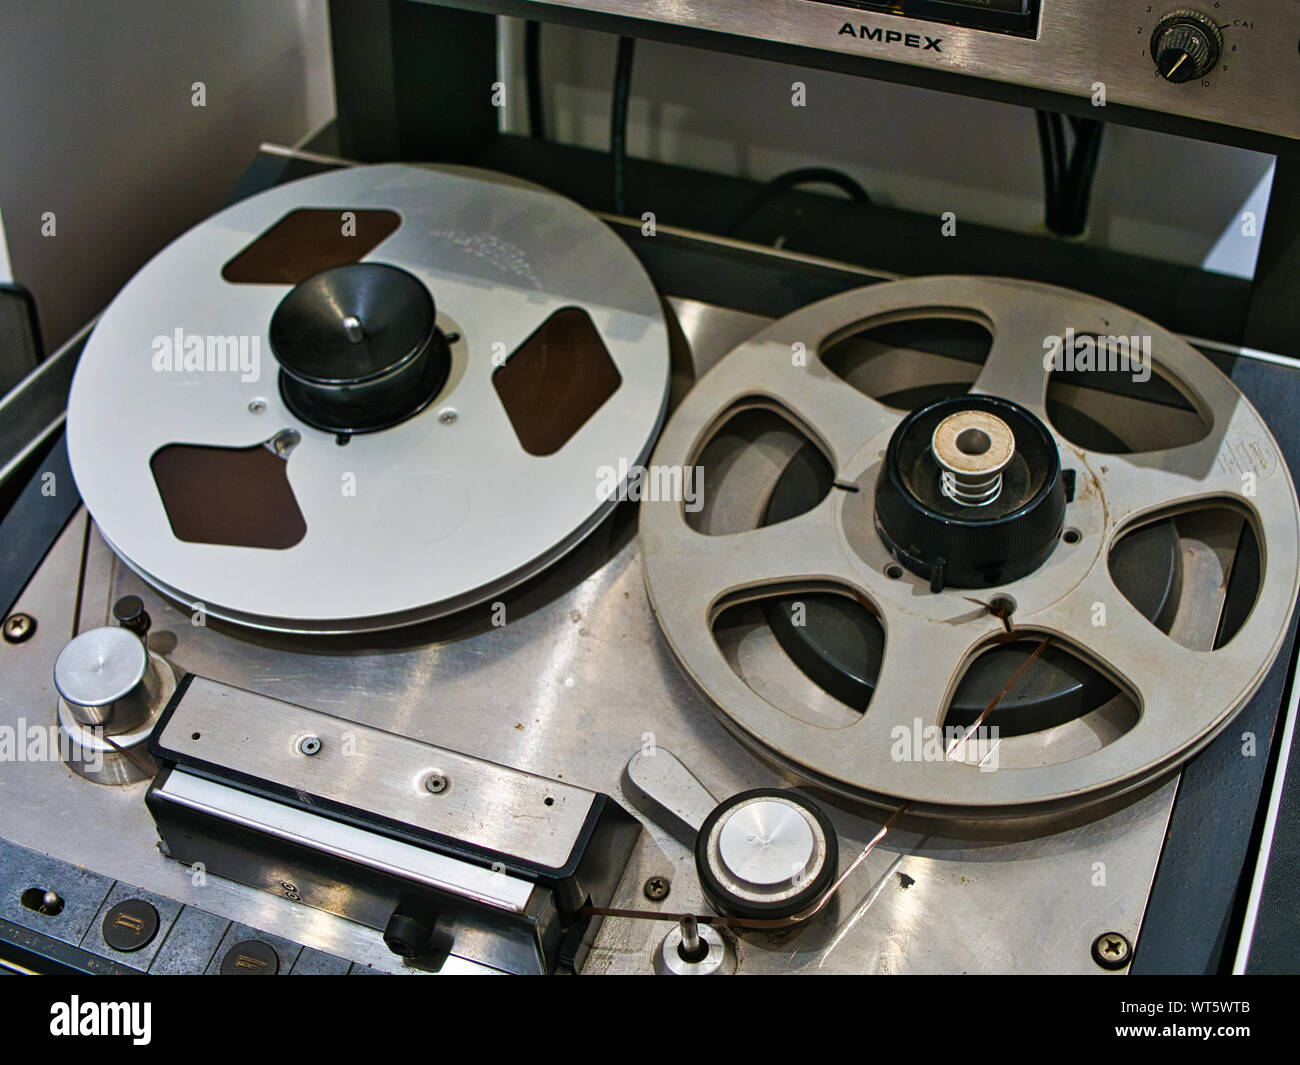 apex commercial reel to reel tape player recorder vintage Hi-fi